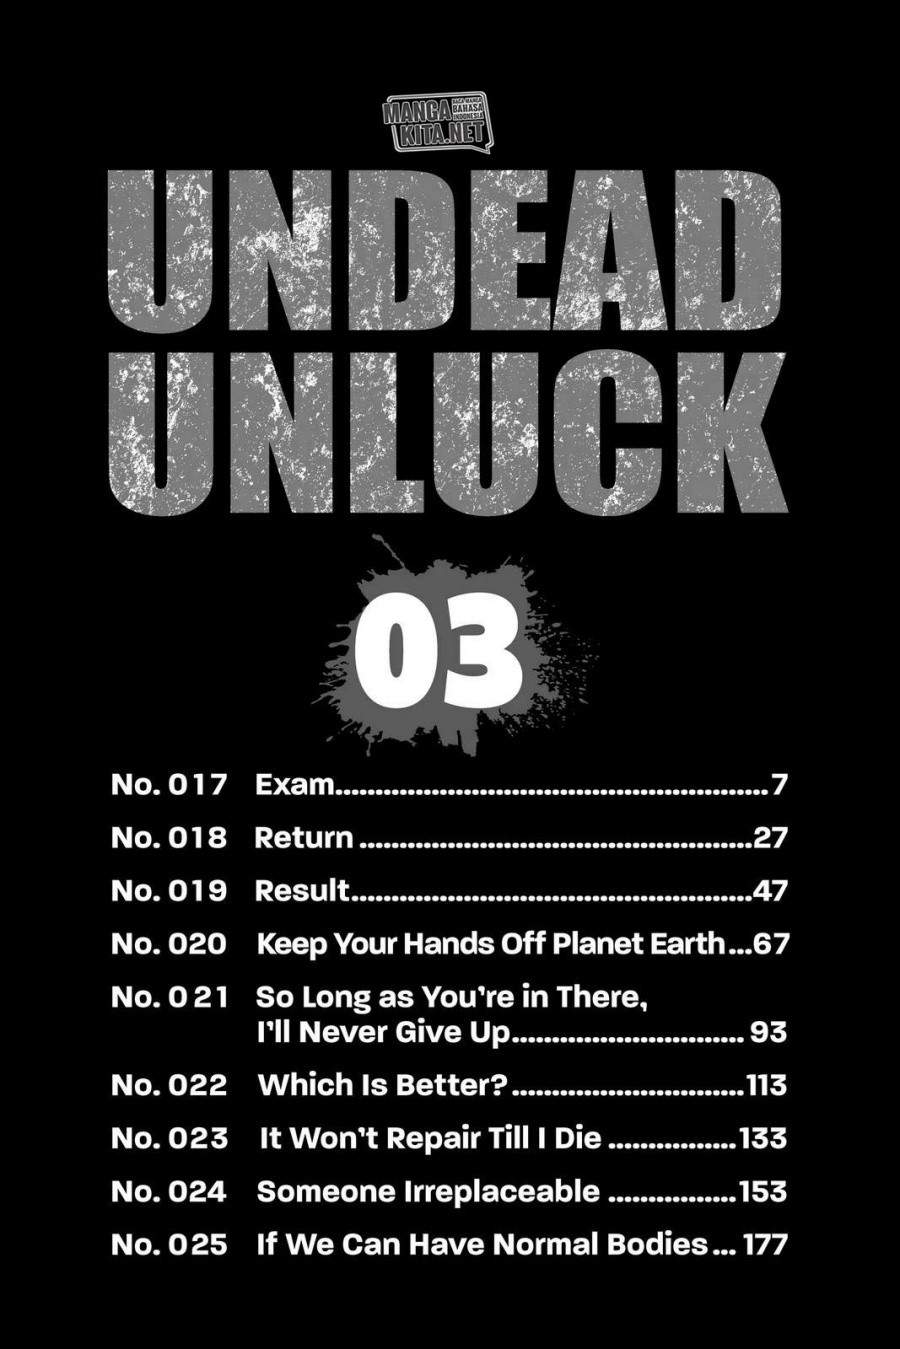 Undead Unluck Chapter 17